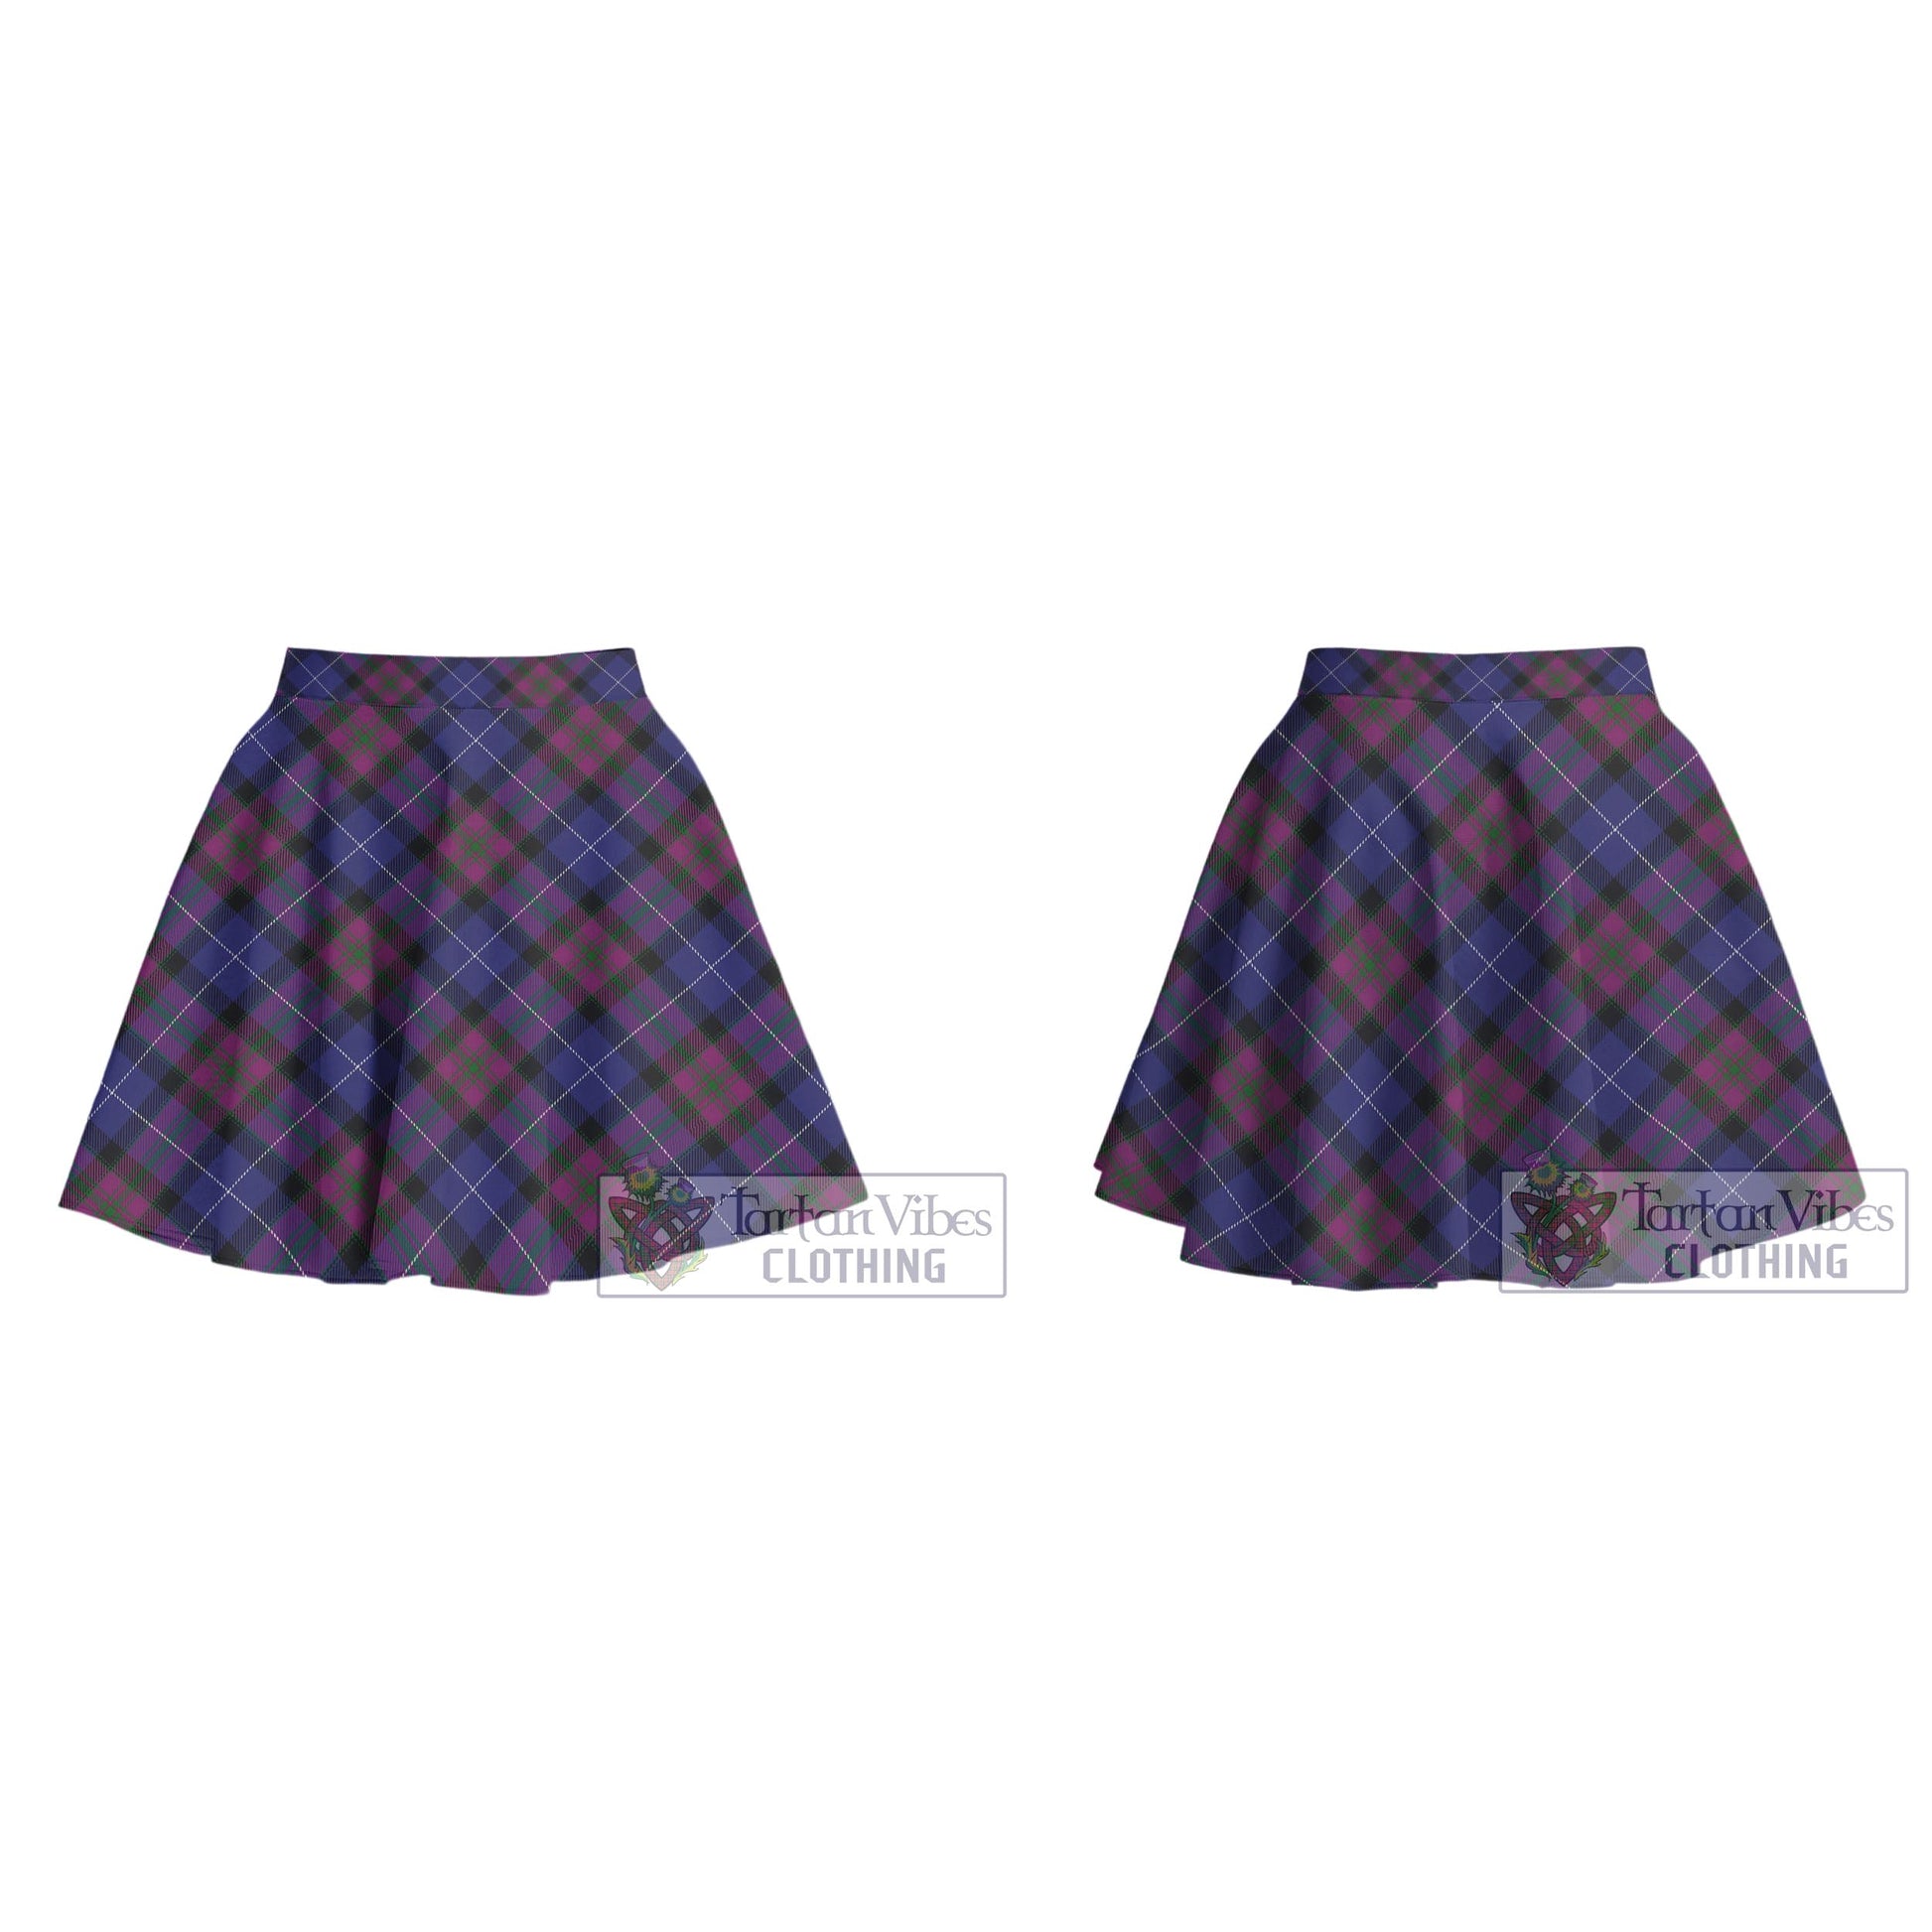 Tartan Vibes Clothing Pride of Scotland Tartan Women's Plated Mini Skirt